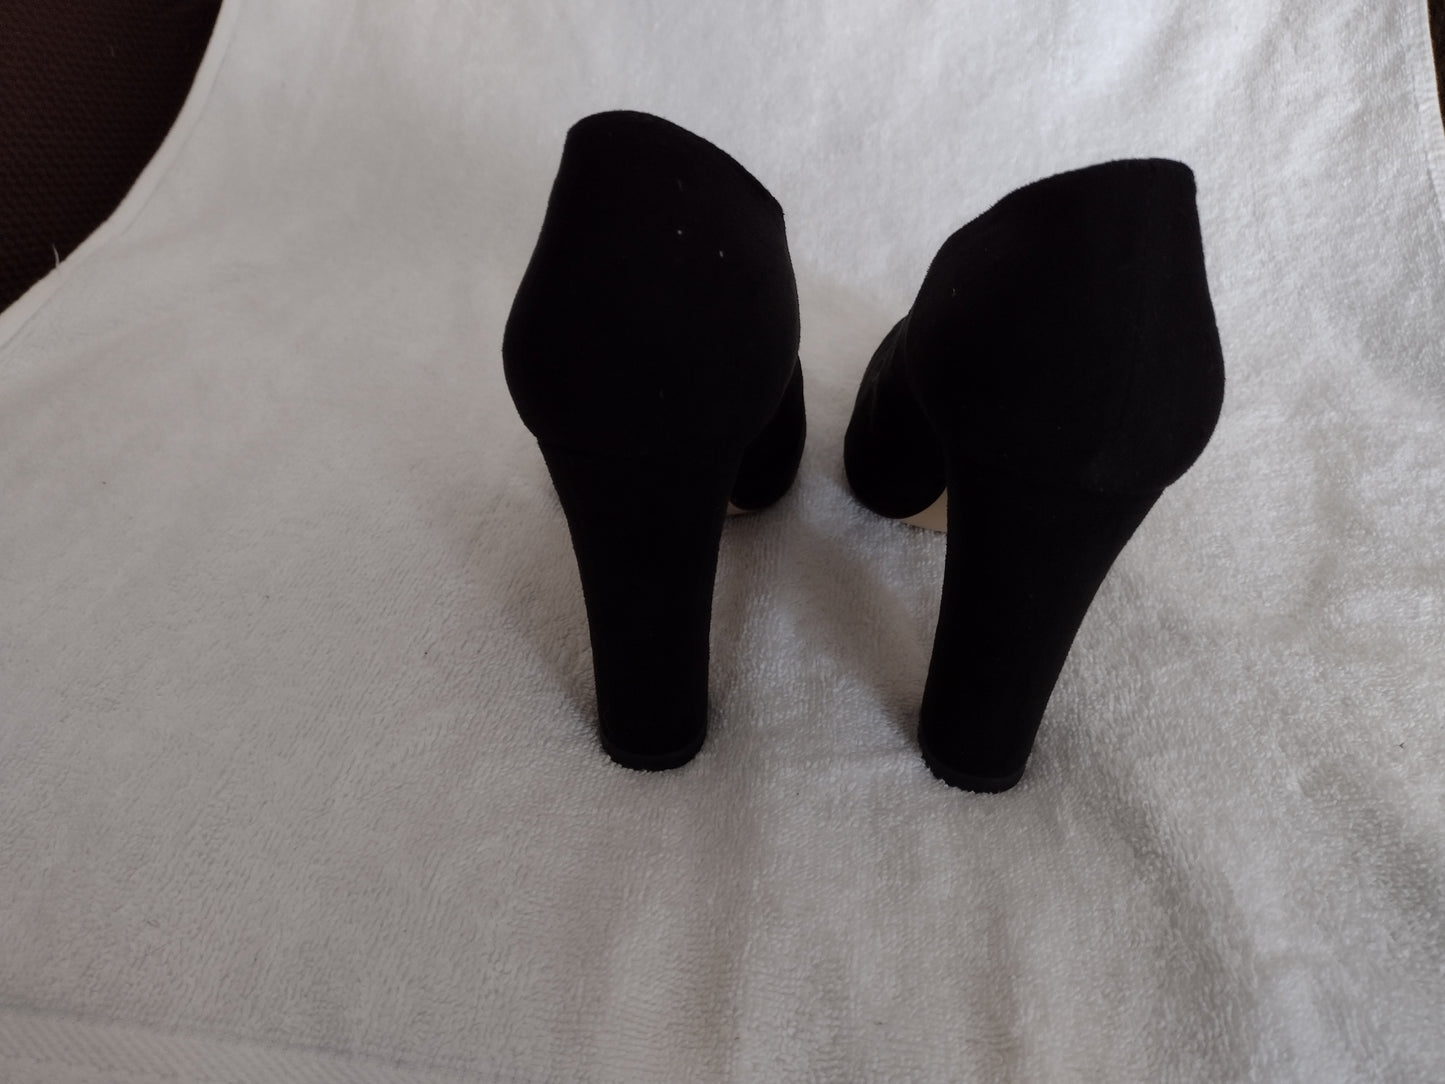 Black Velvet Stiletto Heels Party Dress Shoes by Miss Shoe Style 364-1 Size 9